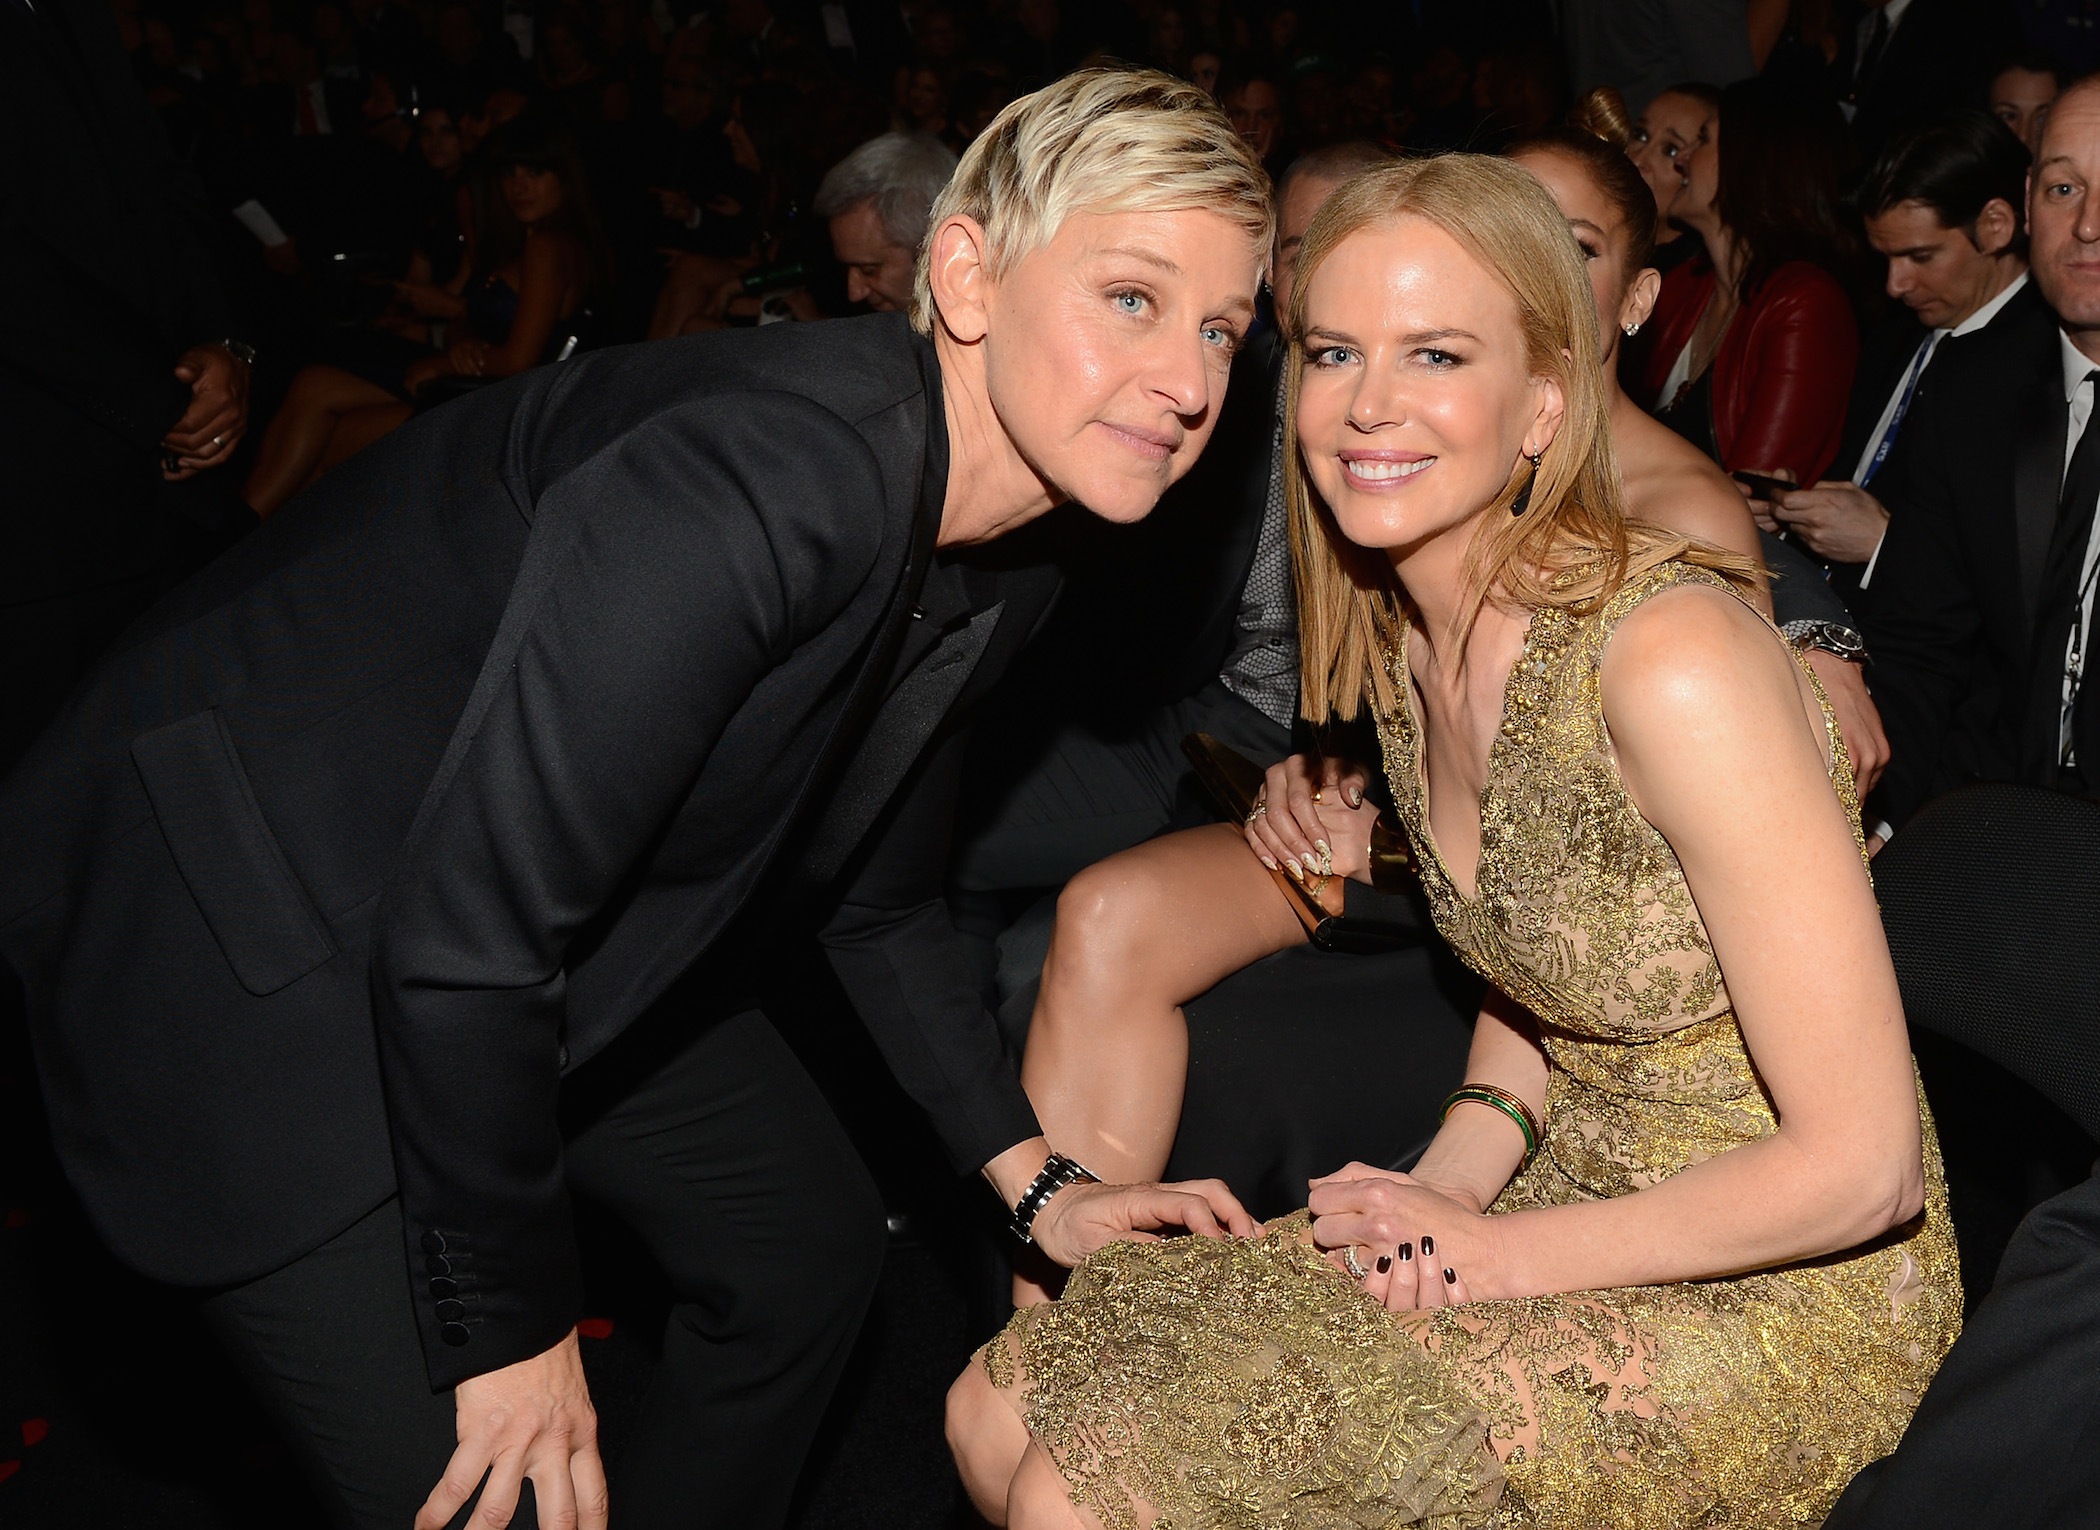 Ellen DeGeneres and actress Nicole Kidman attend the 55th Annual Grammy Awards 